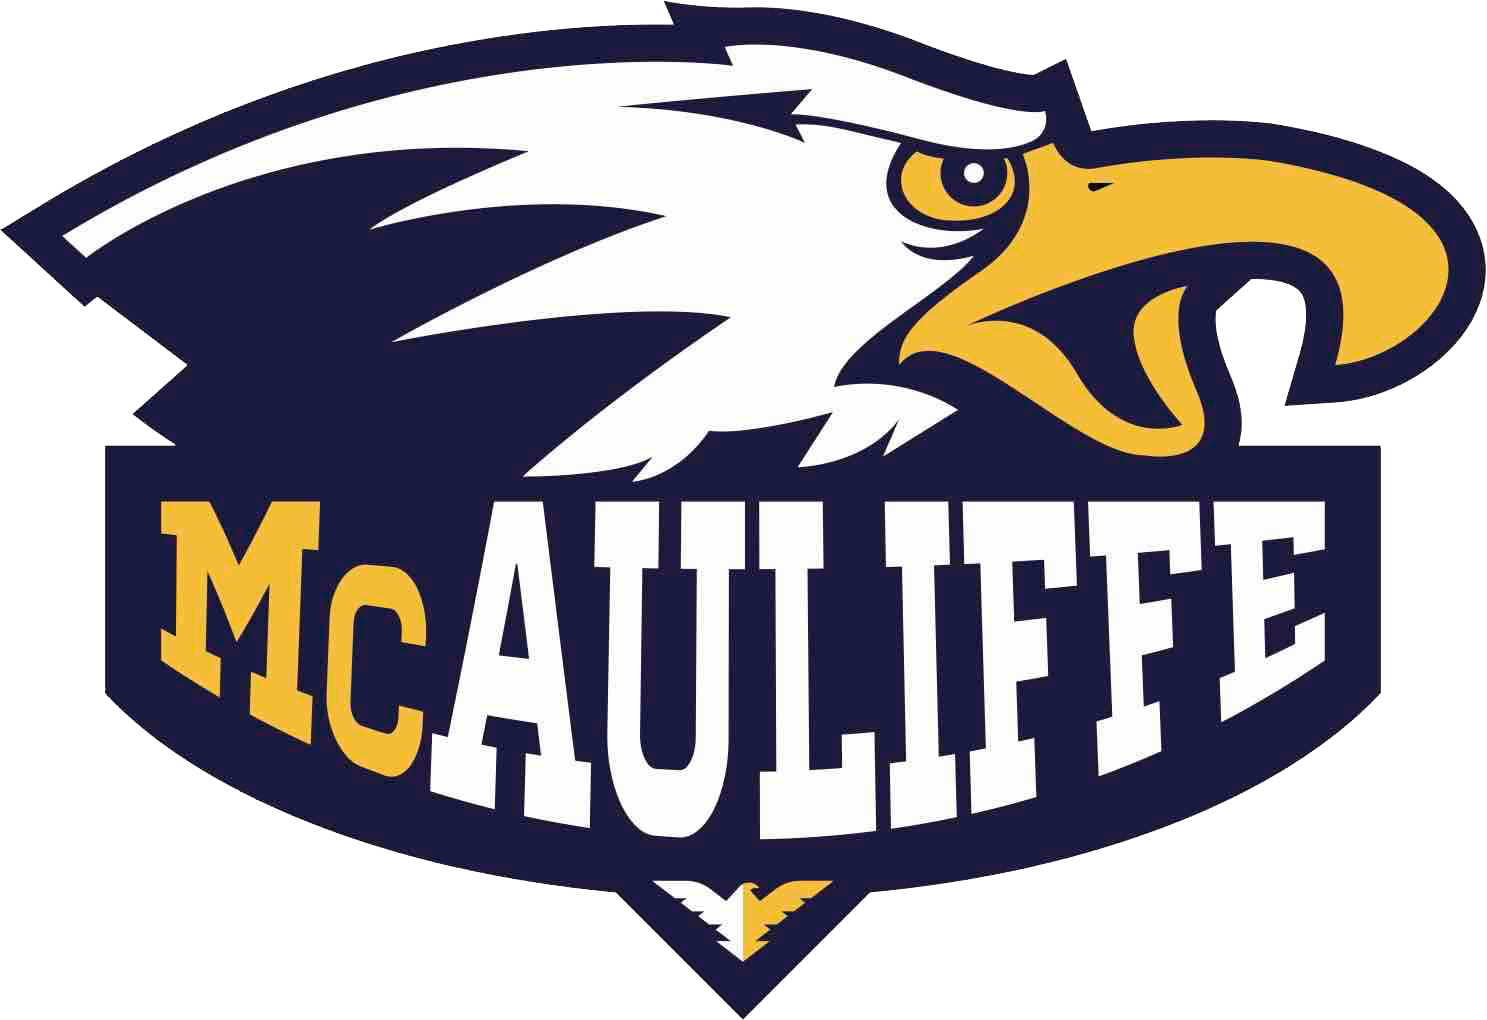 Mcauliffe Middle School - Mcauliffe Middle School Mascot (1487x1020)